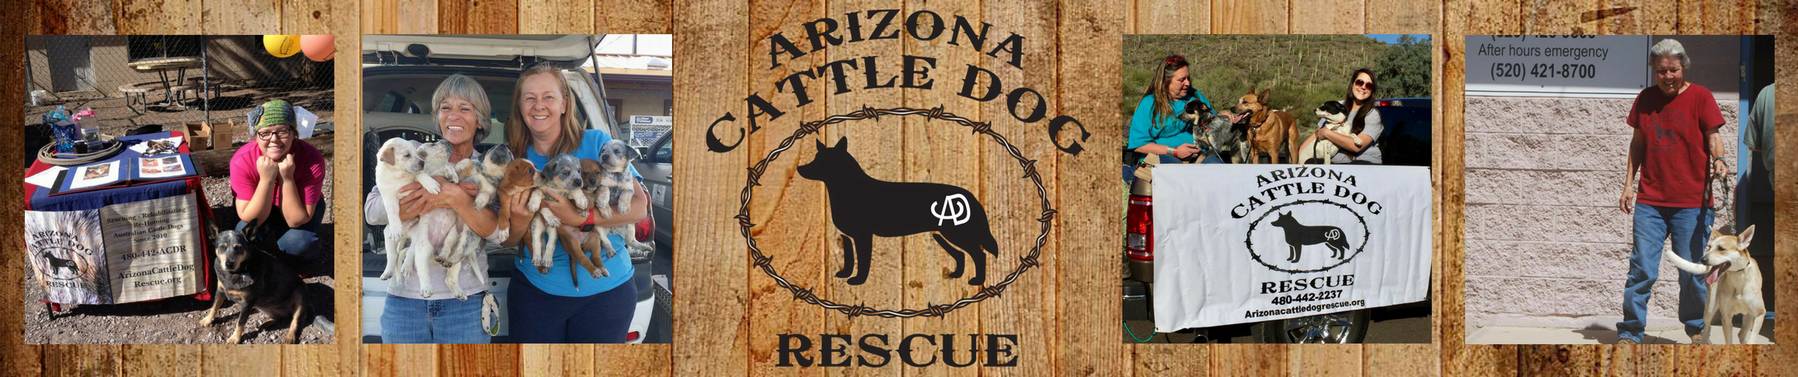 arizona cattle dog rescue banner